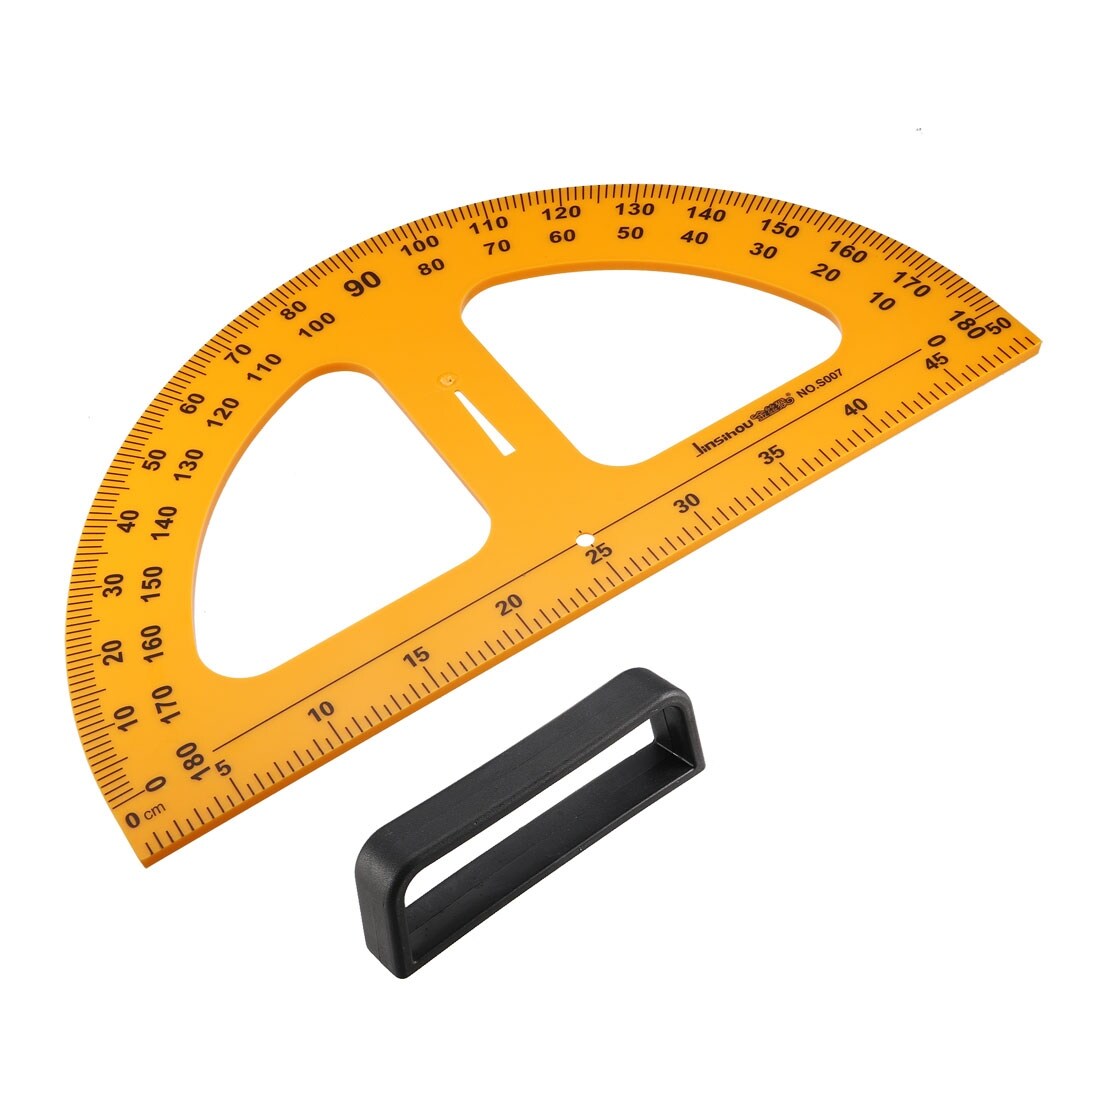 Angle Engineer Protractor Finder 180 Degree Measure Arm Ruler Gauge Tool plastic 